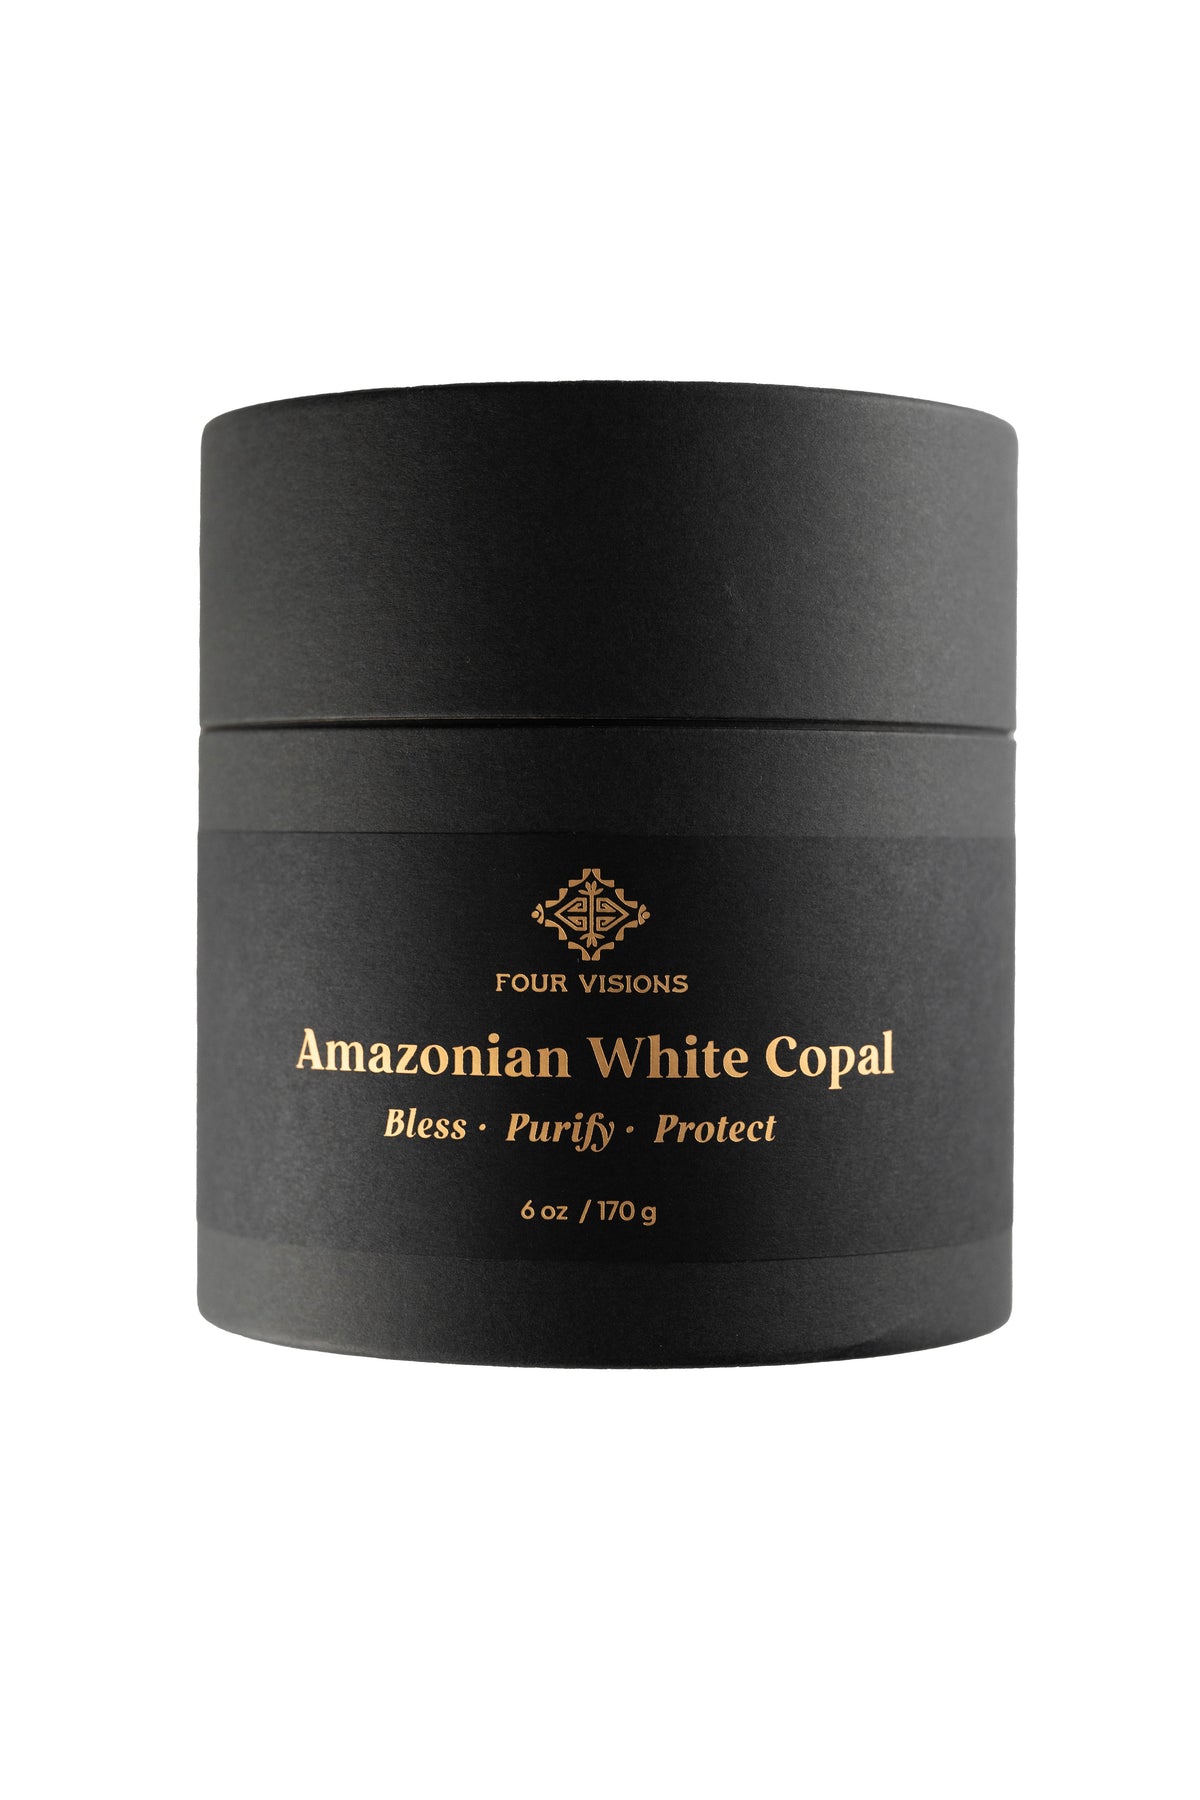 Amazonian White Copal